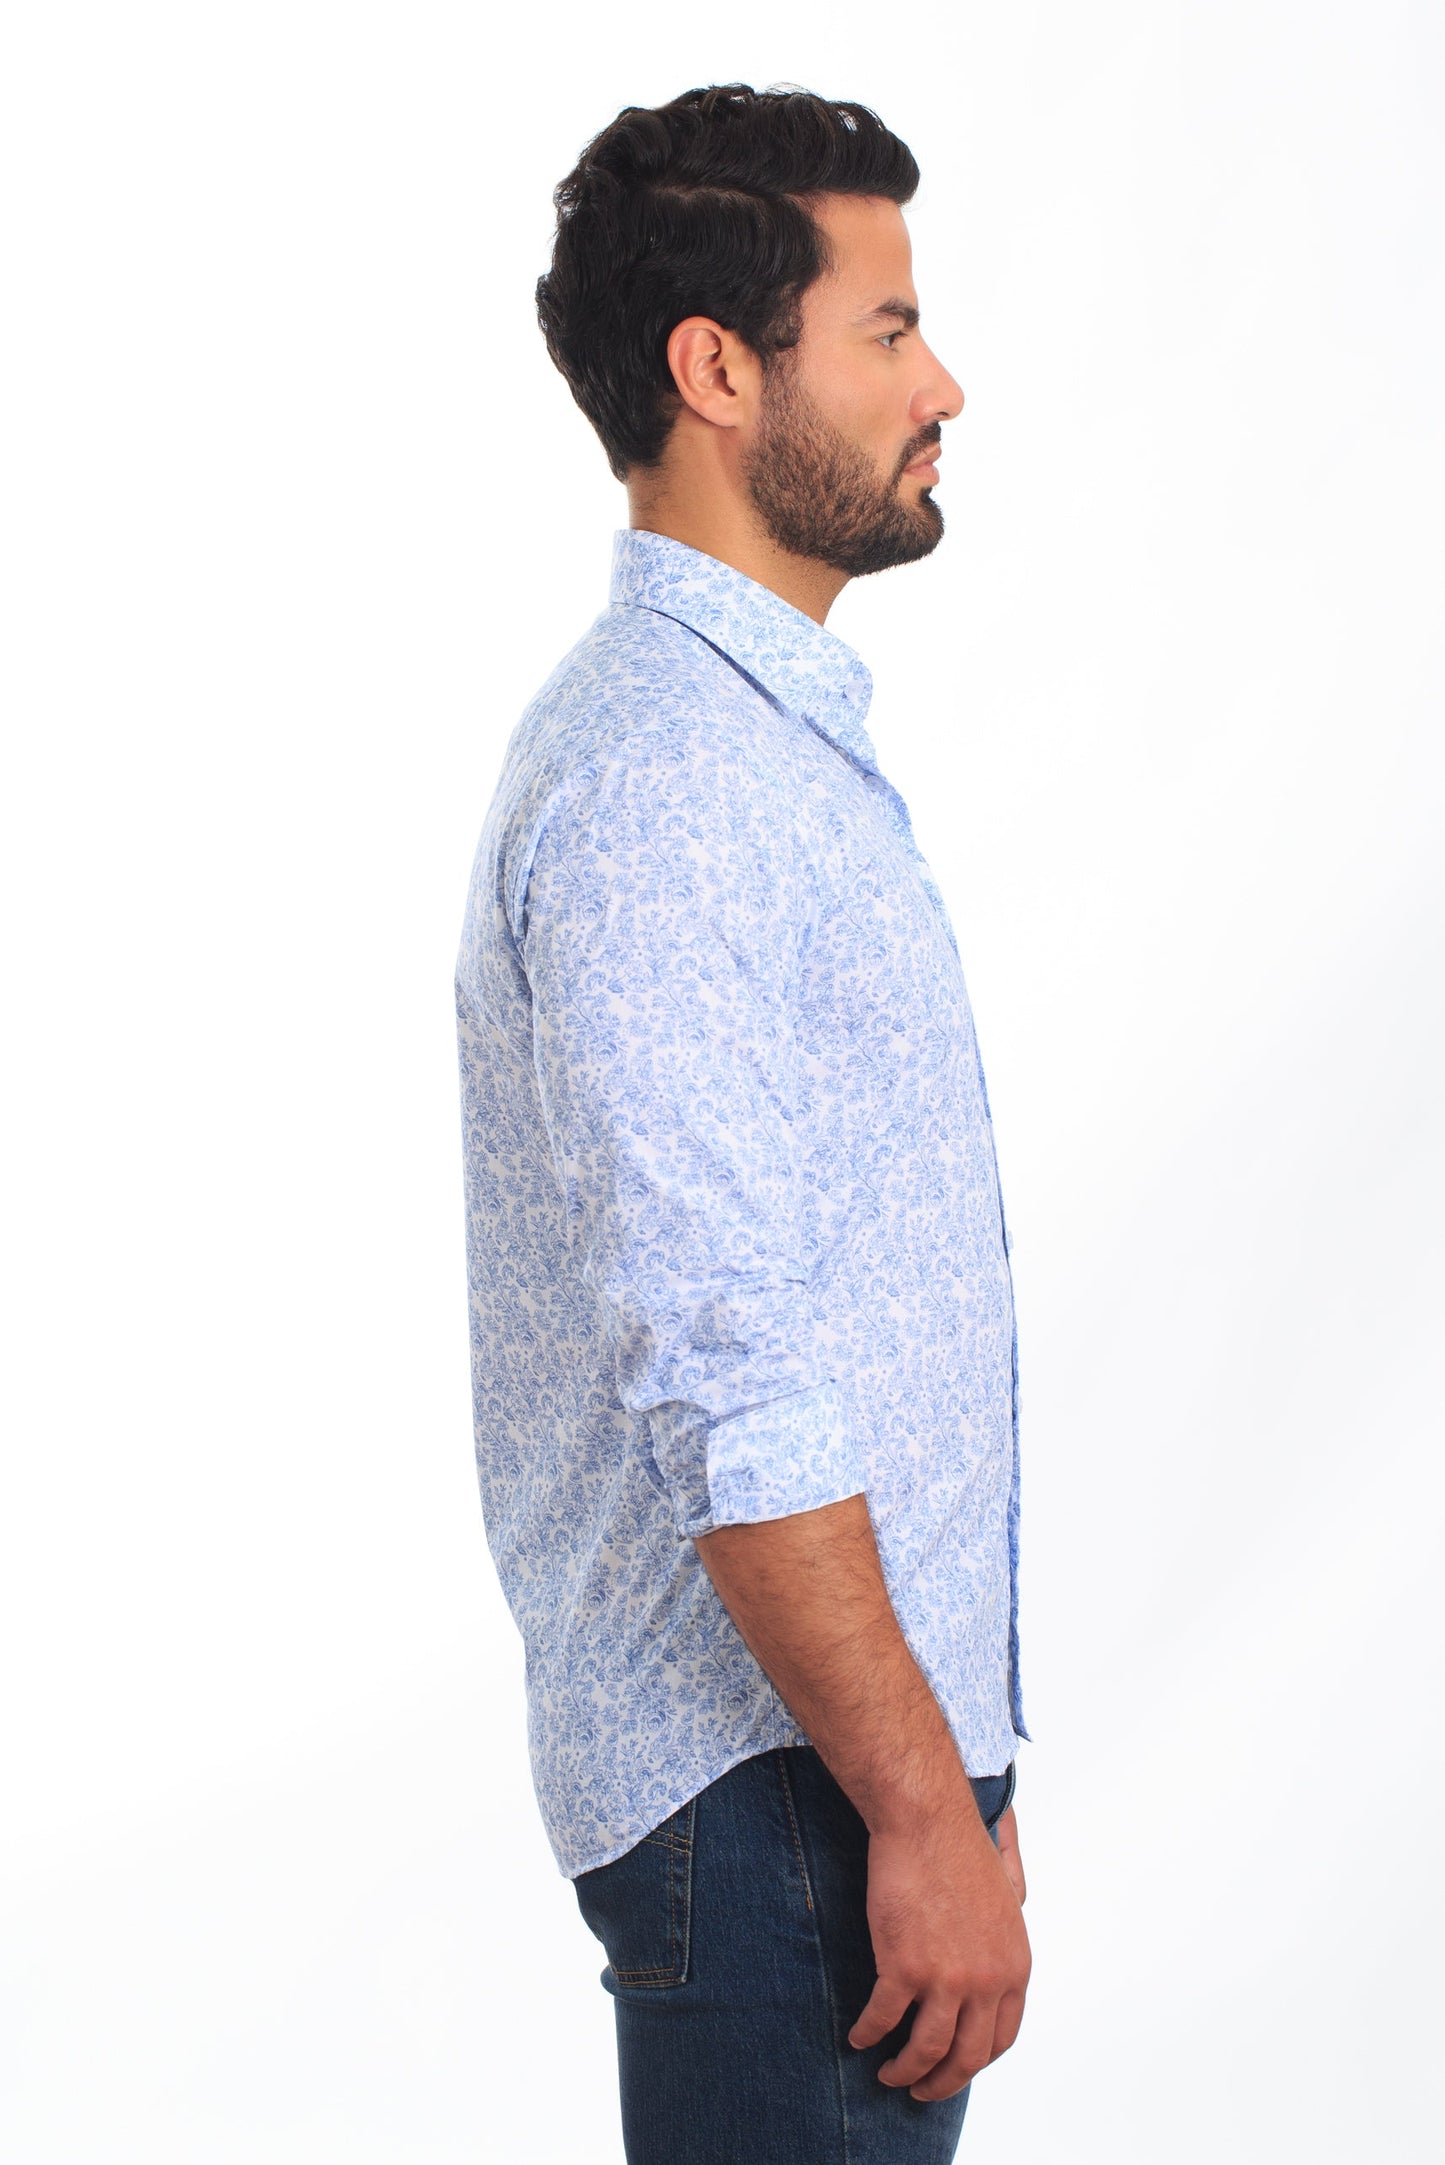 White + Blue Long Sleeve Shirt T-6842 Side